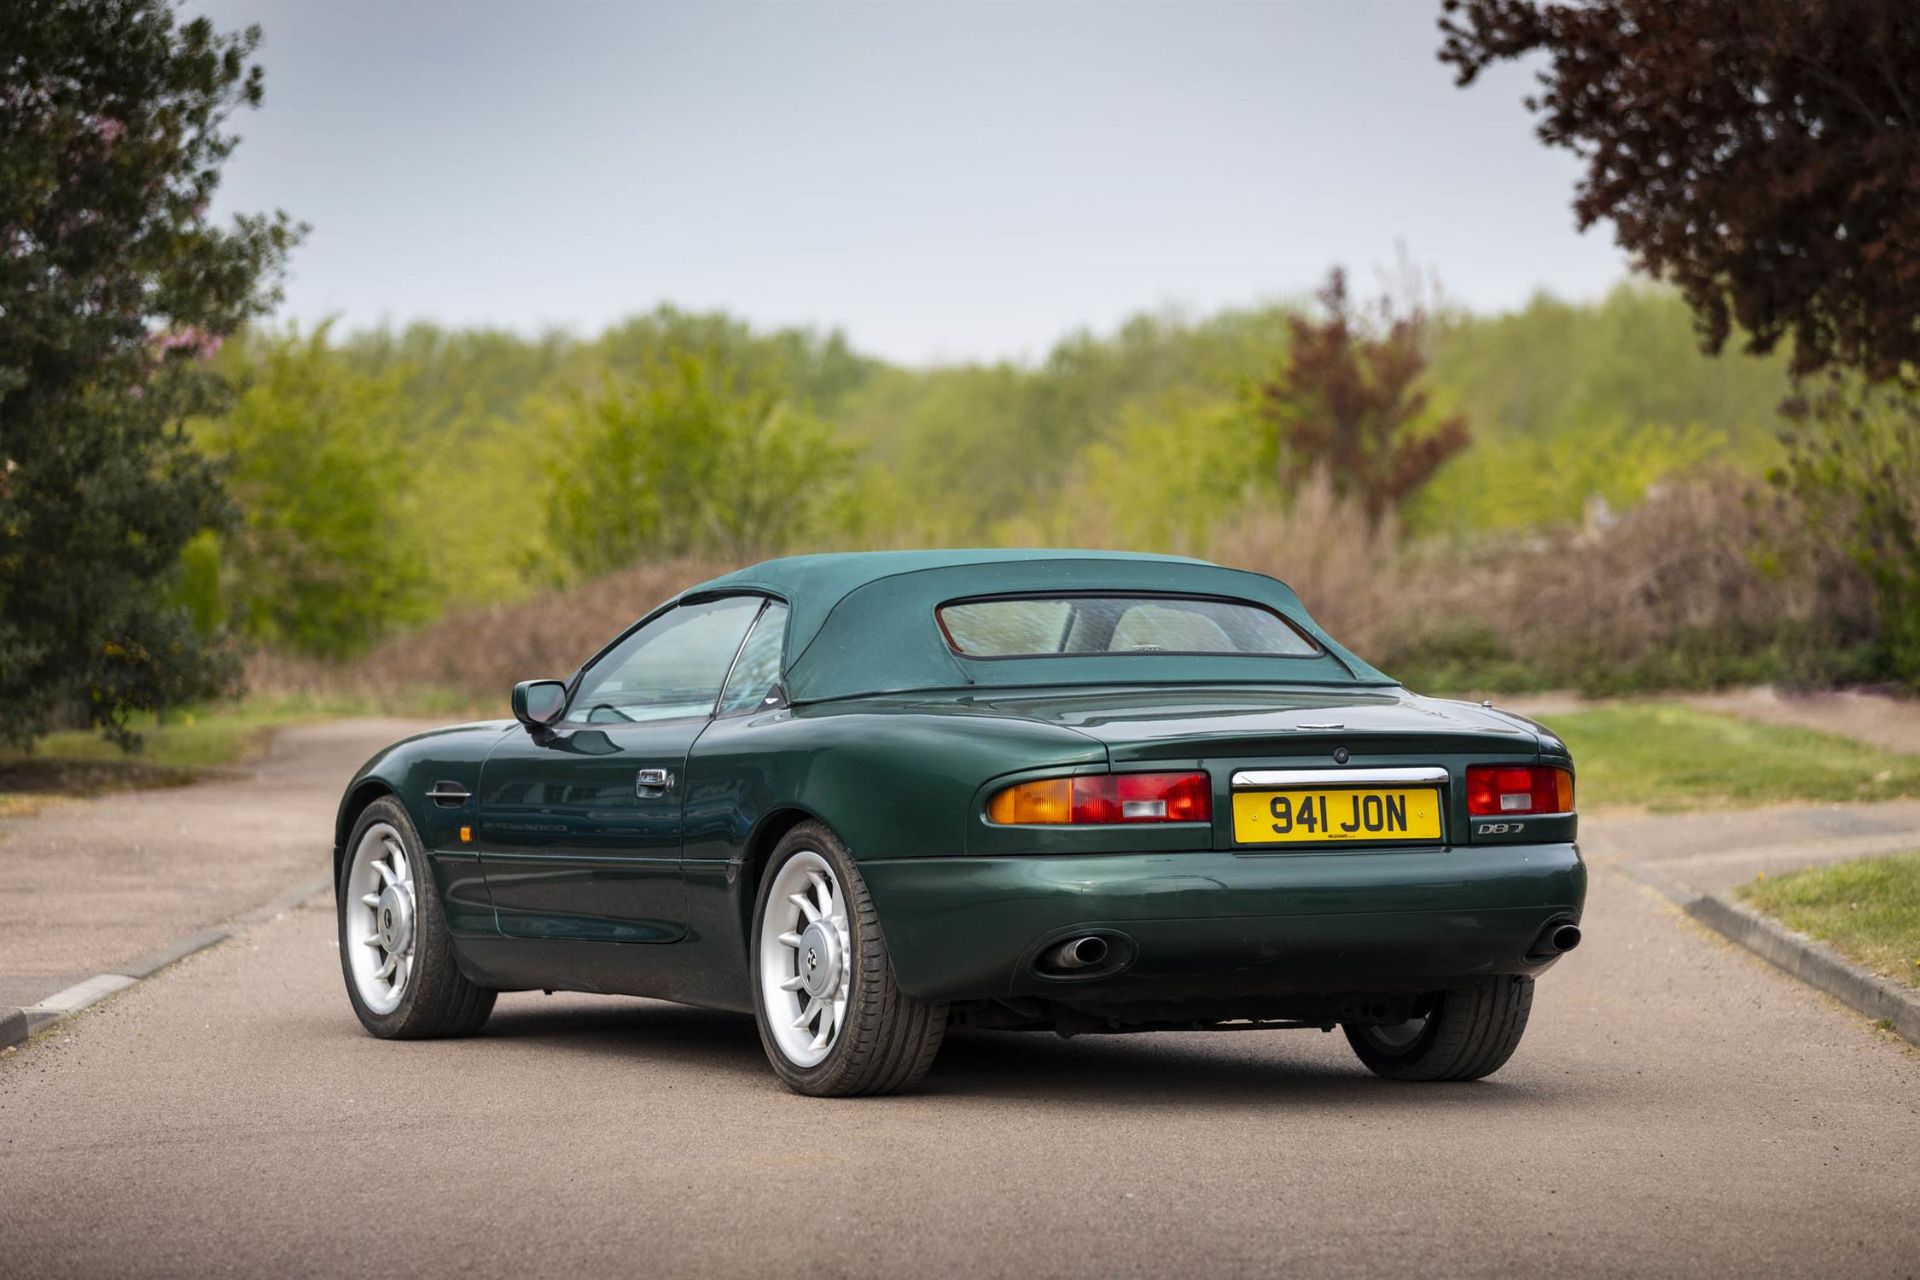 1998 Aston Martin DB7 Volante - Image 2 of 4